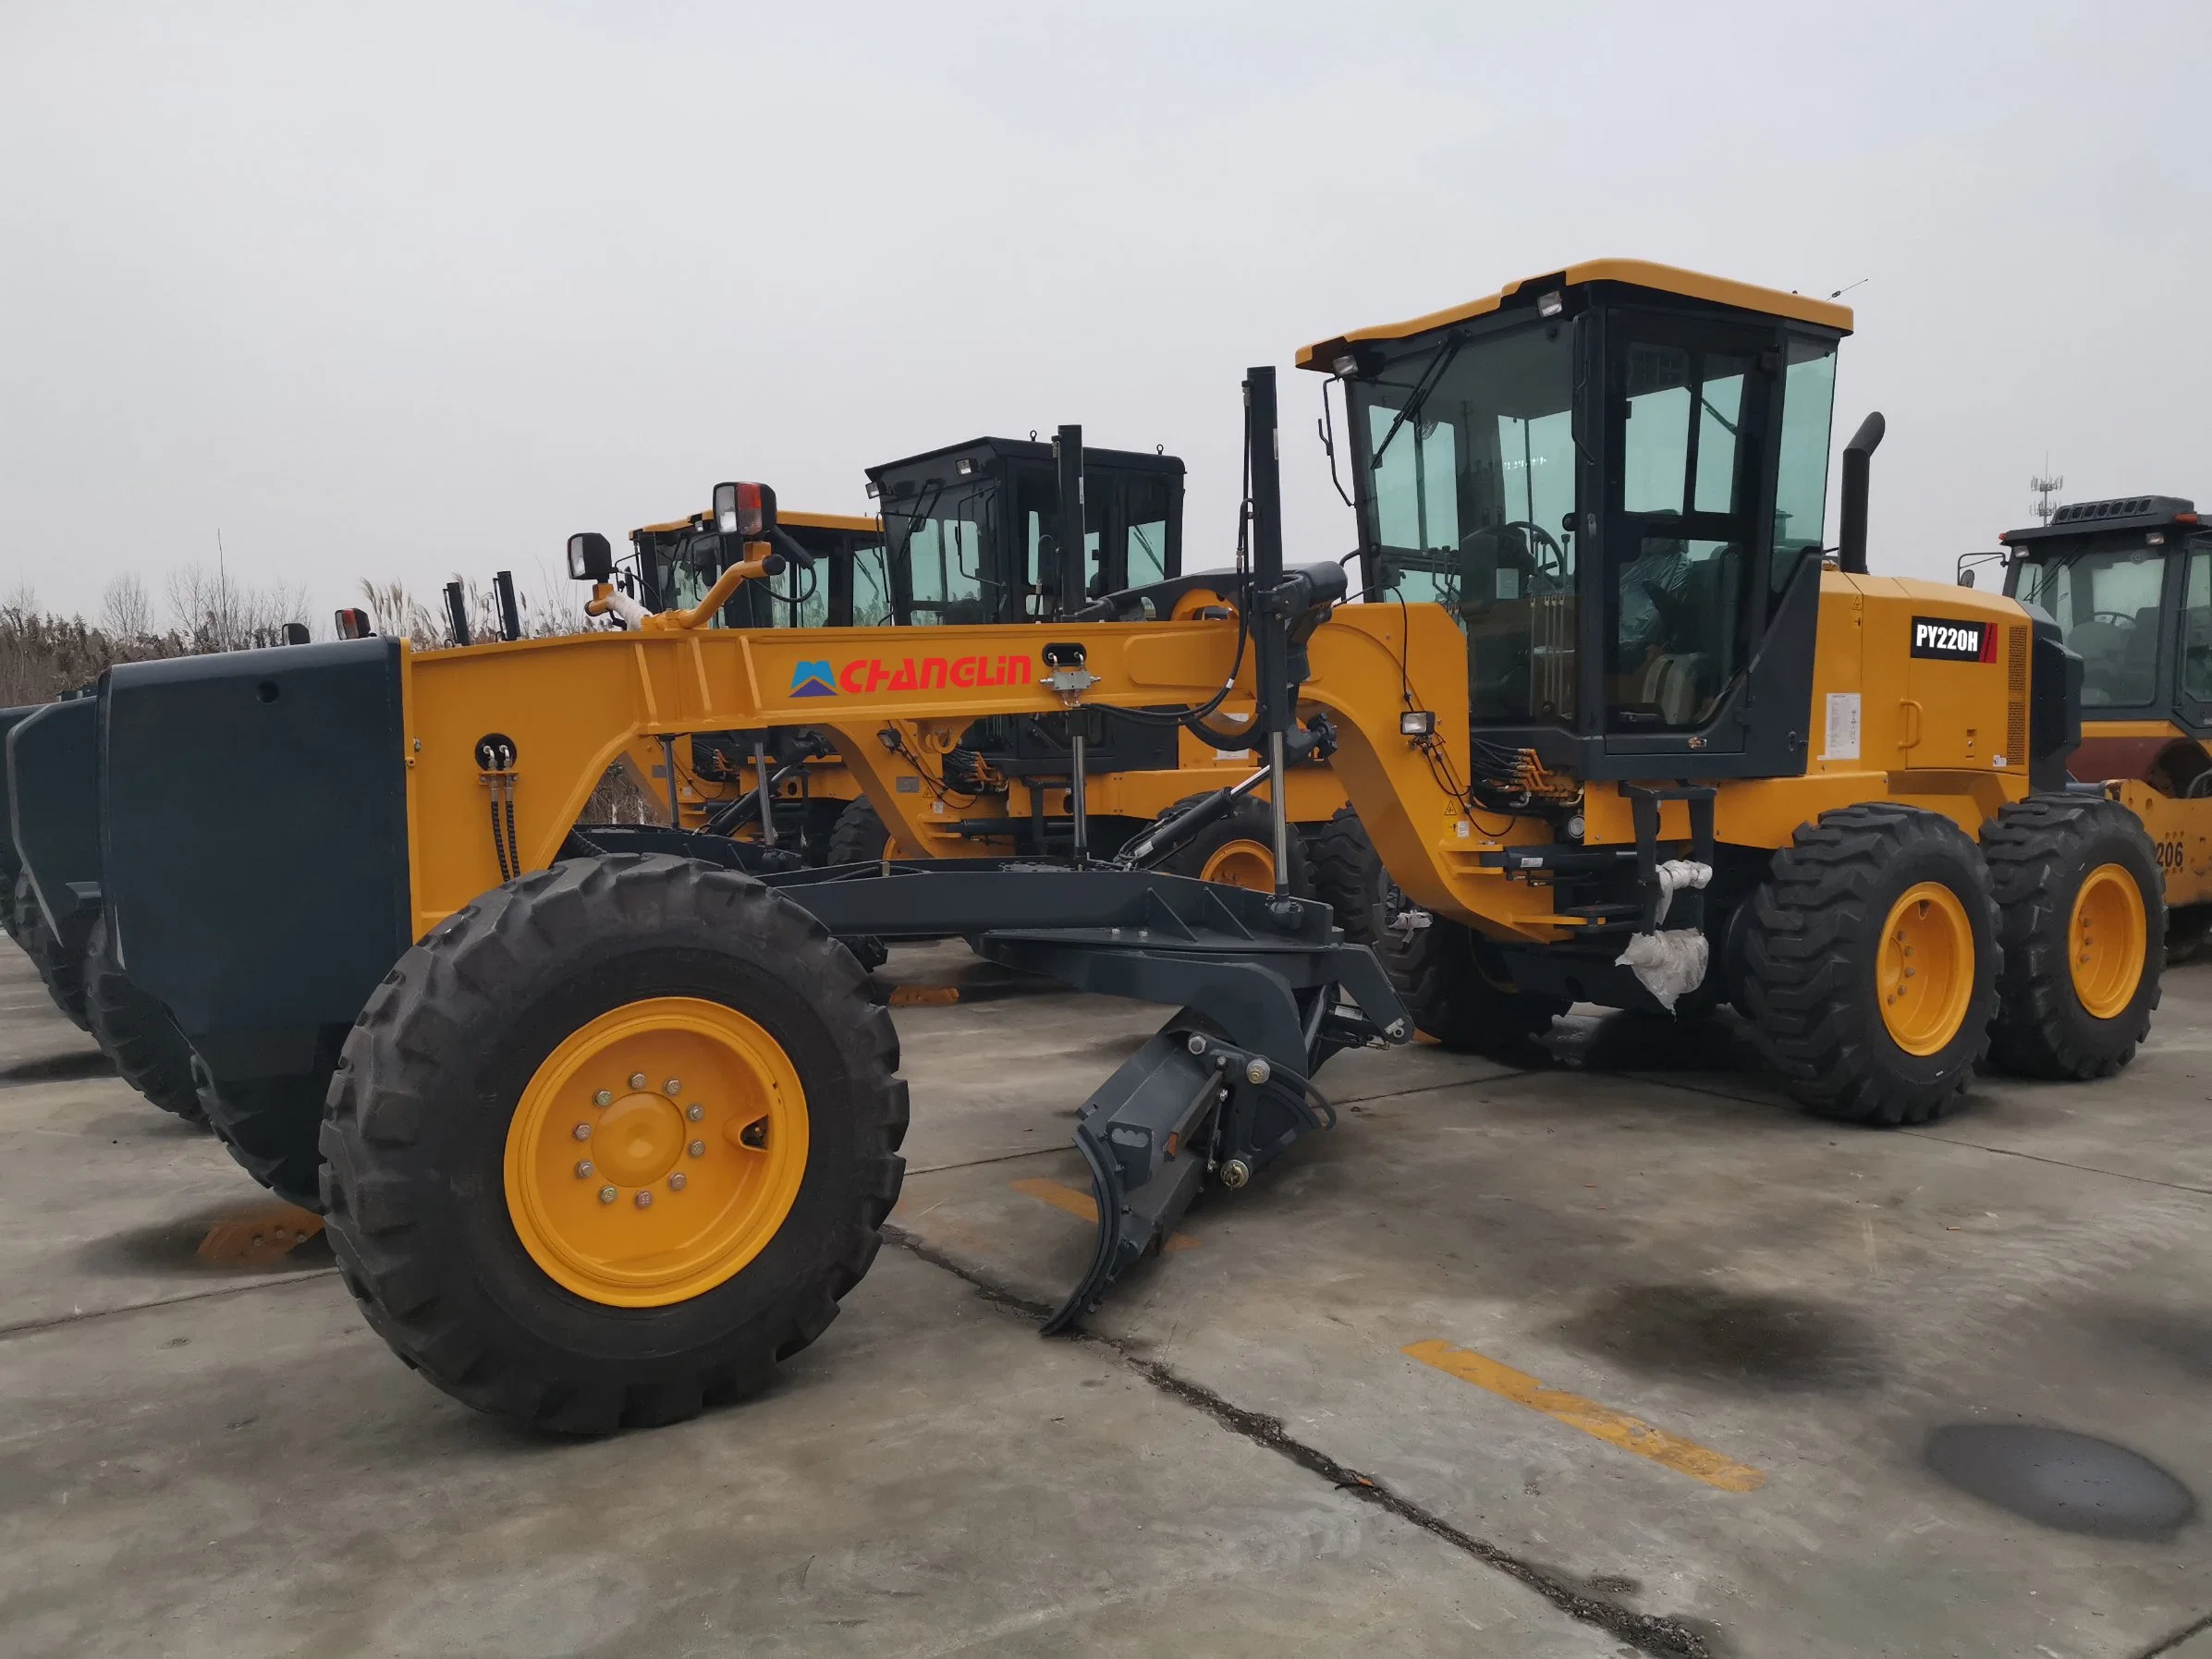 Changlin Py220h Motor Grader Road Construction Machine Road Equipment